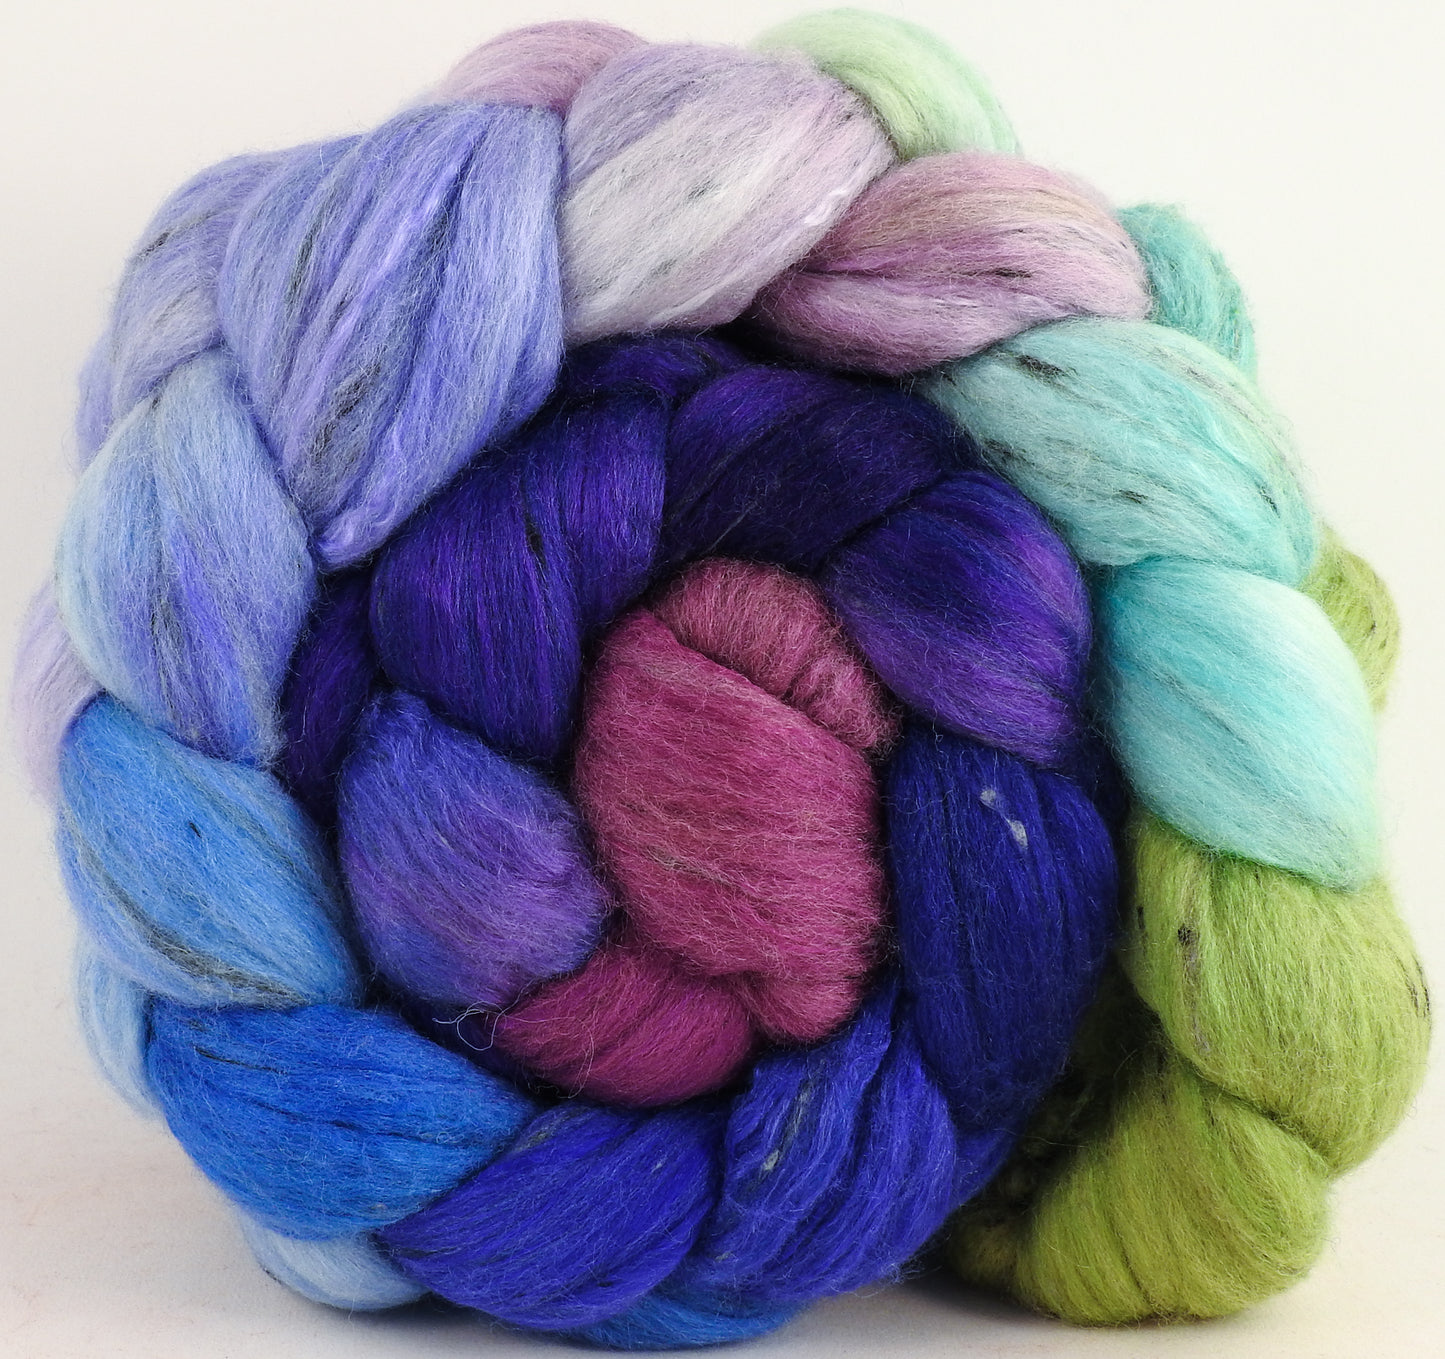 Batt in a Braid #49 - Larkspur - Polwarth/ Mulberry Silk/ Tweed Blend (50/25/25)